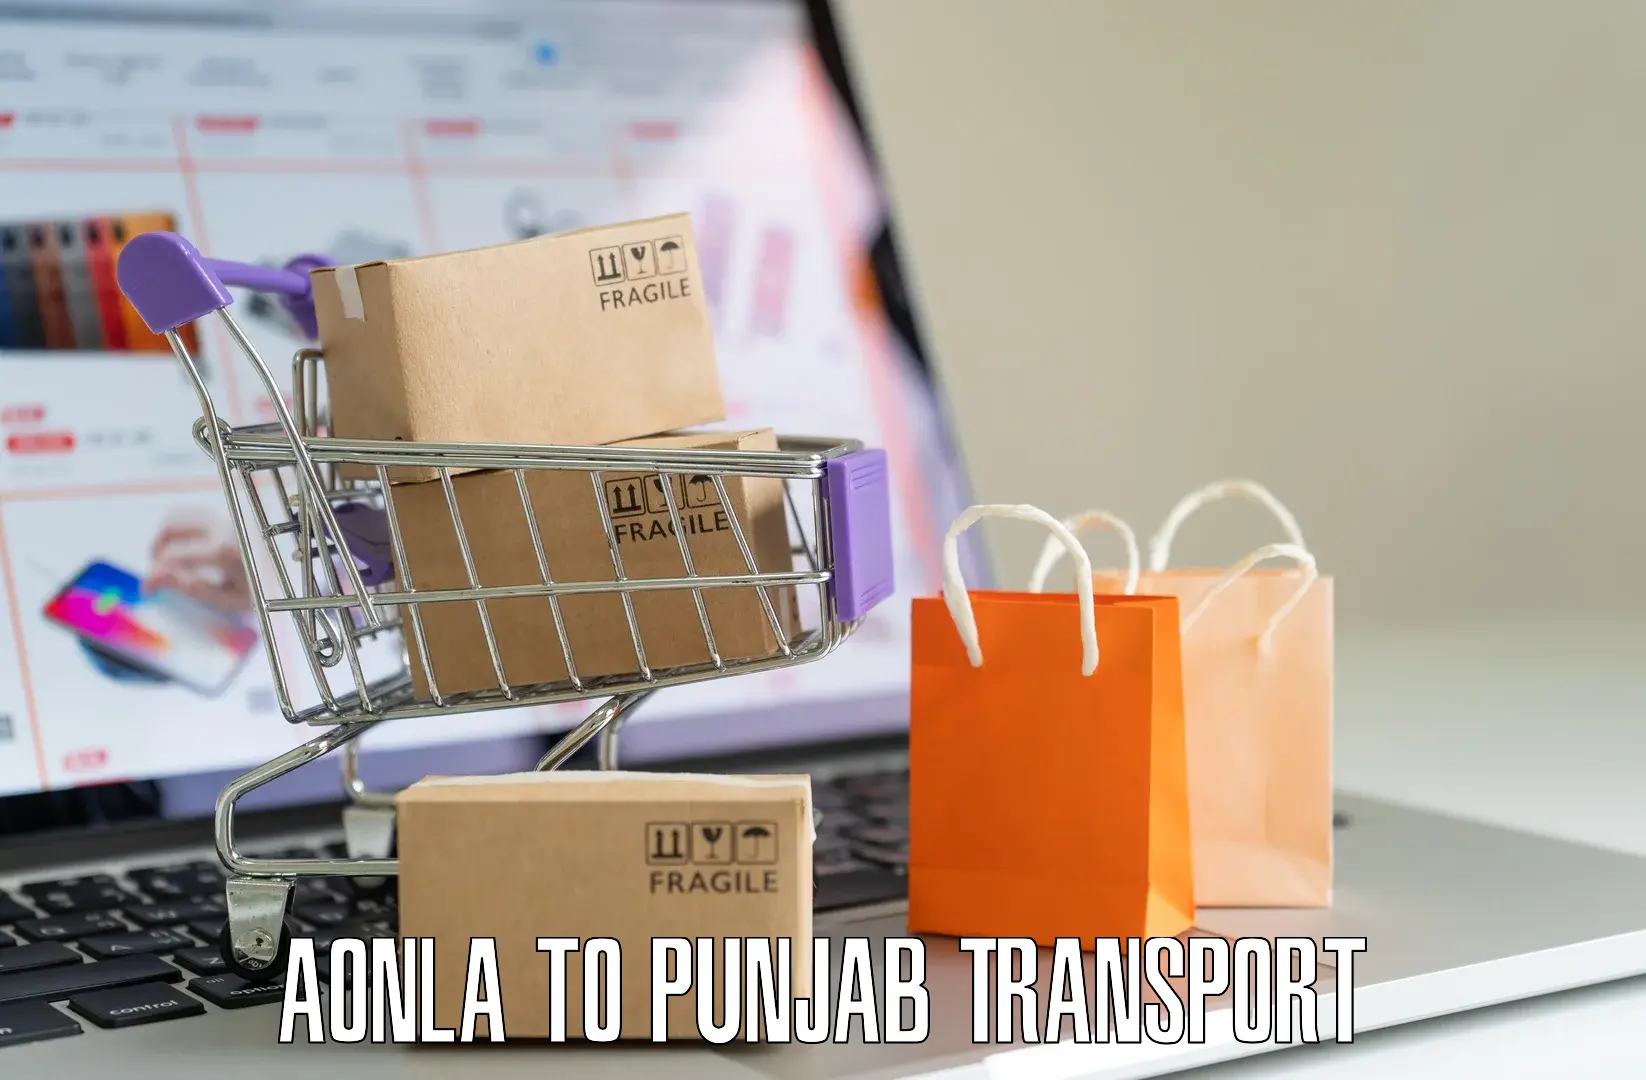 Transport shared services Aonla to Punjab